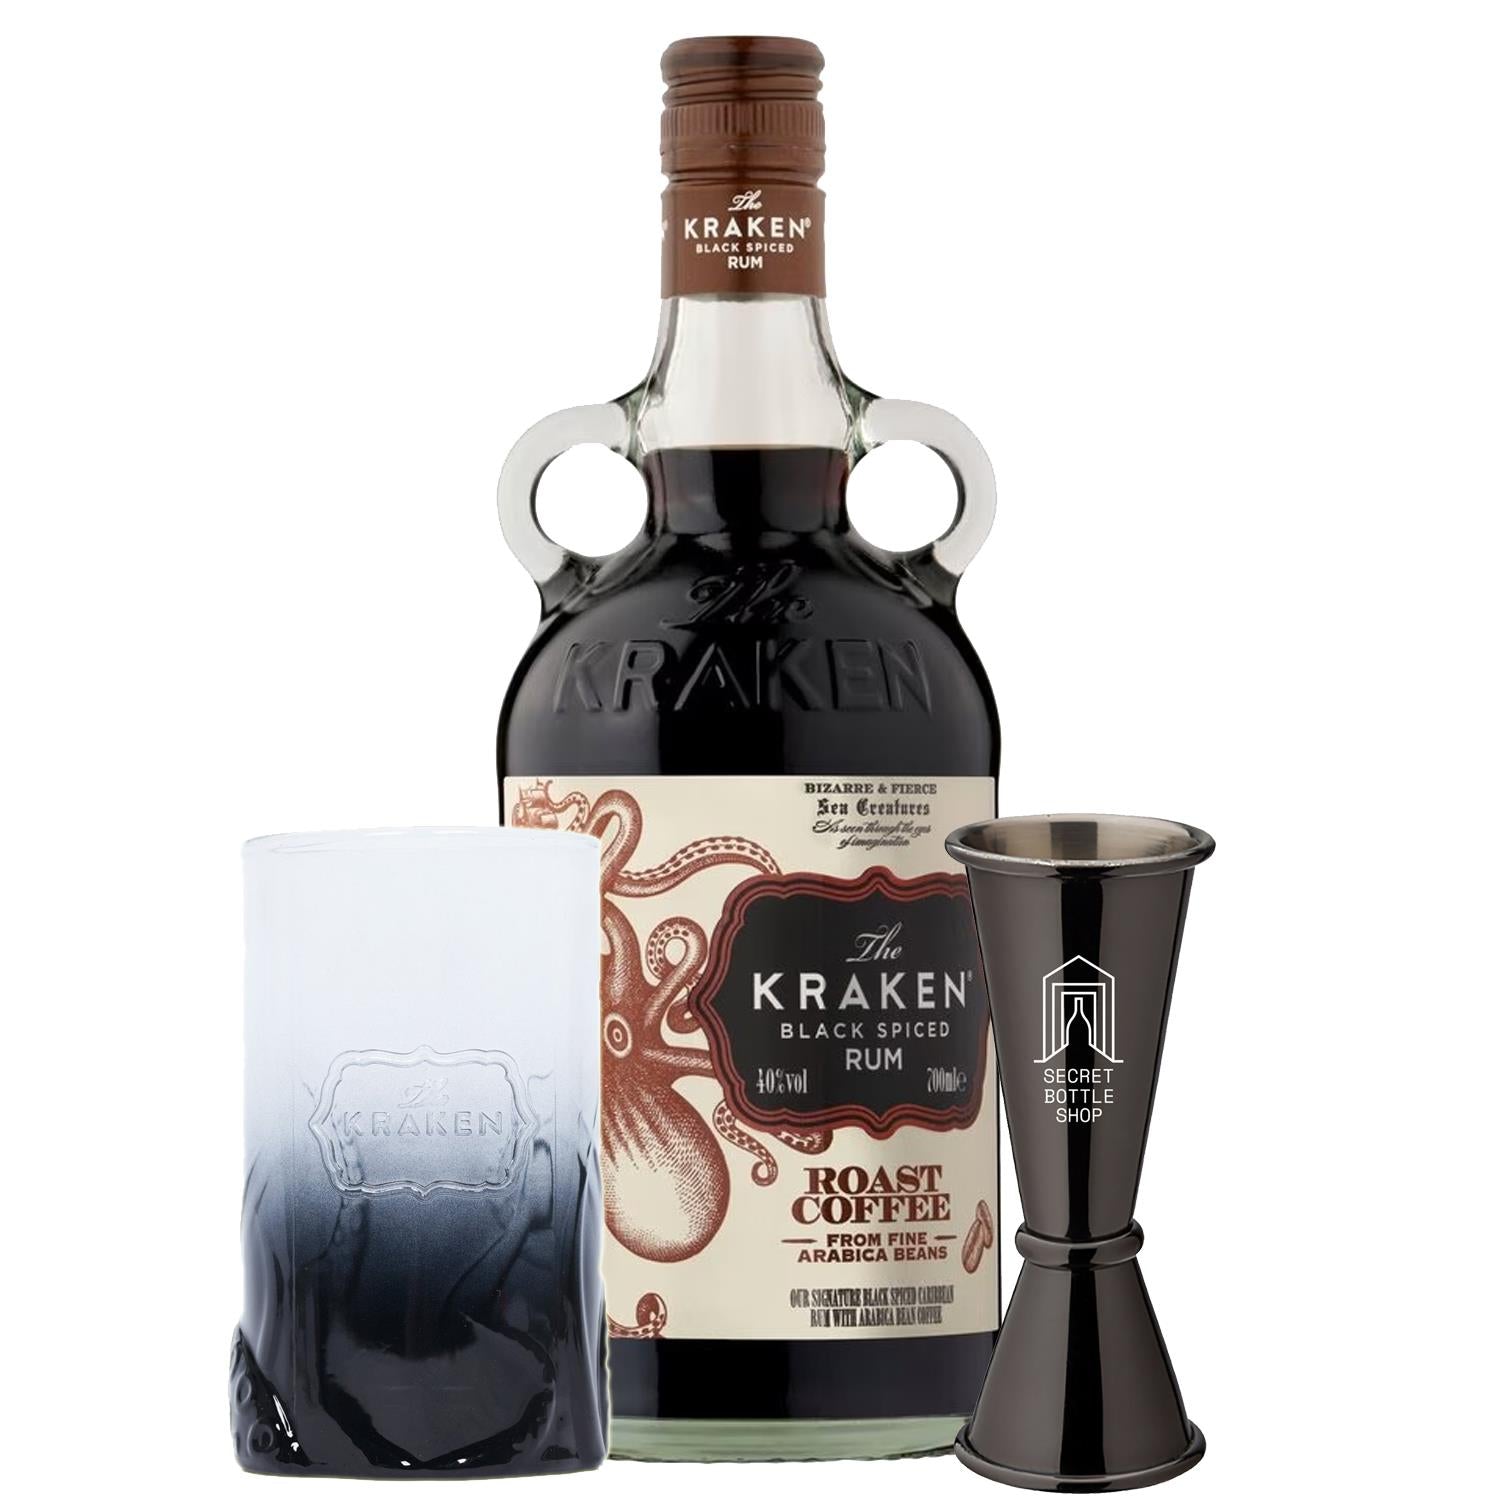 Kraken Black Roast Coffee Rum Gift Set | Gifts for Him